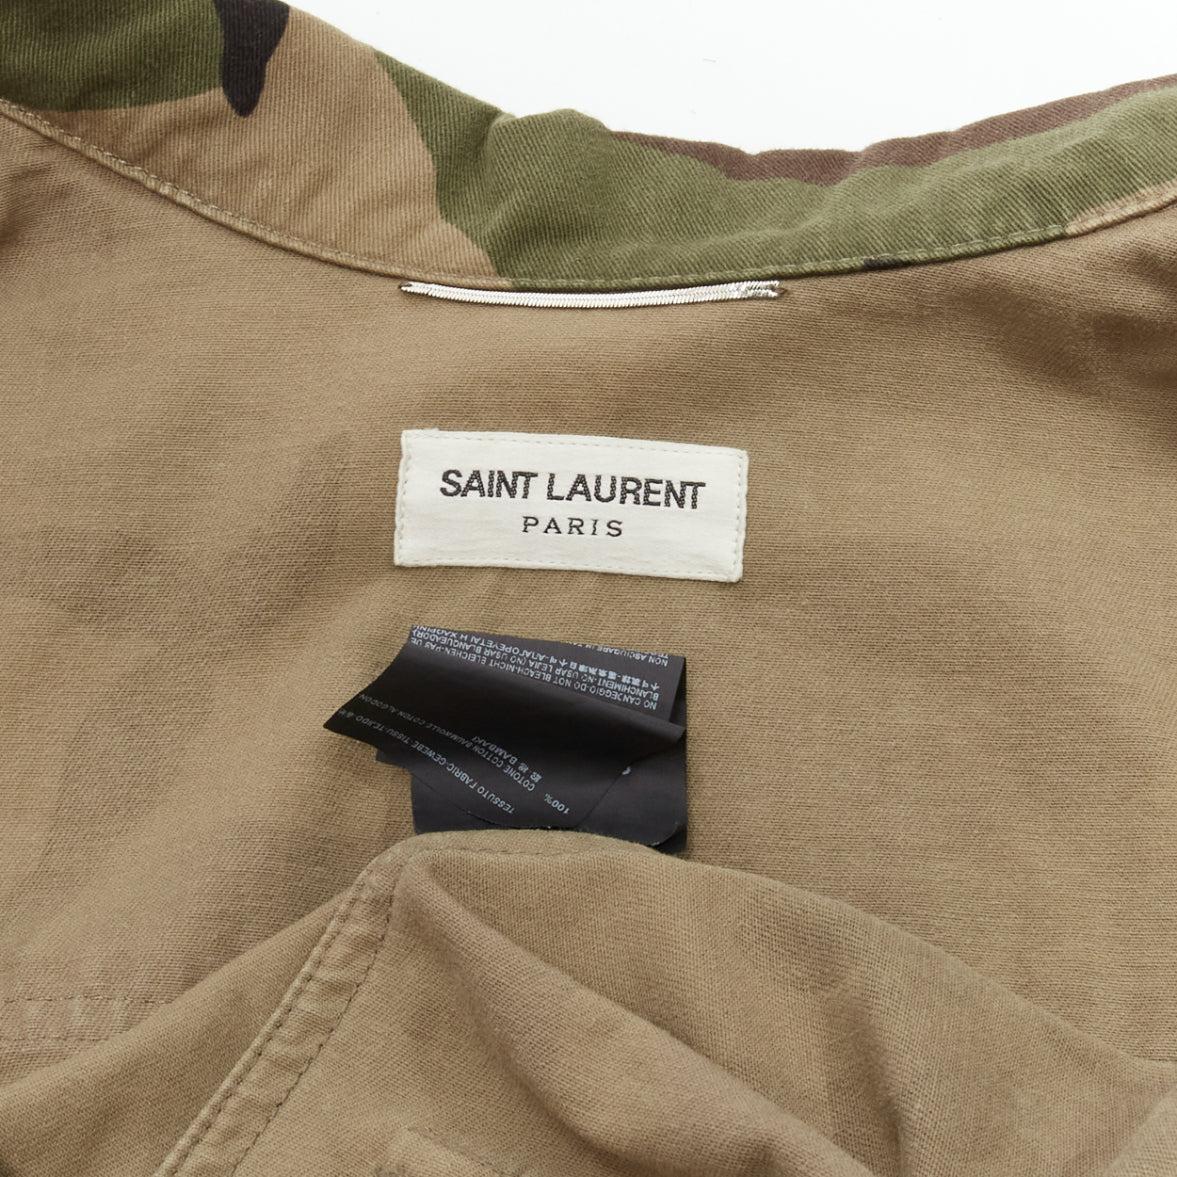 SAINT LAURENT Hedi Slimane 2014 trim camouflage military cargo jacket FR46 S For Sale 5